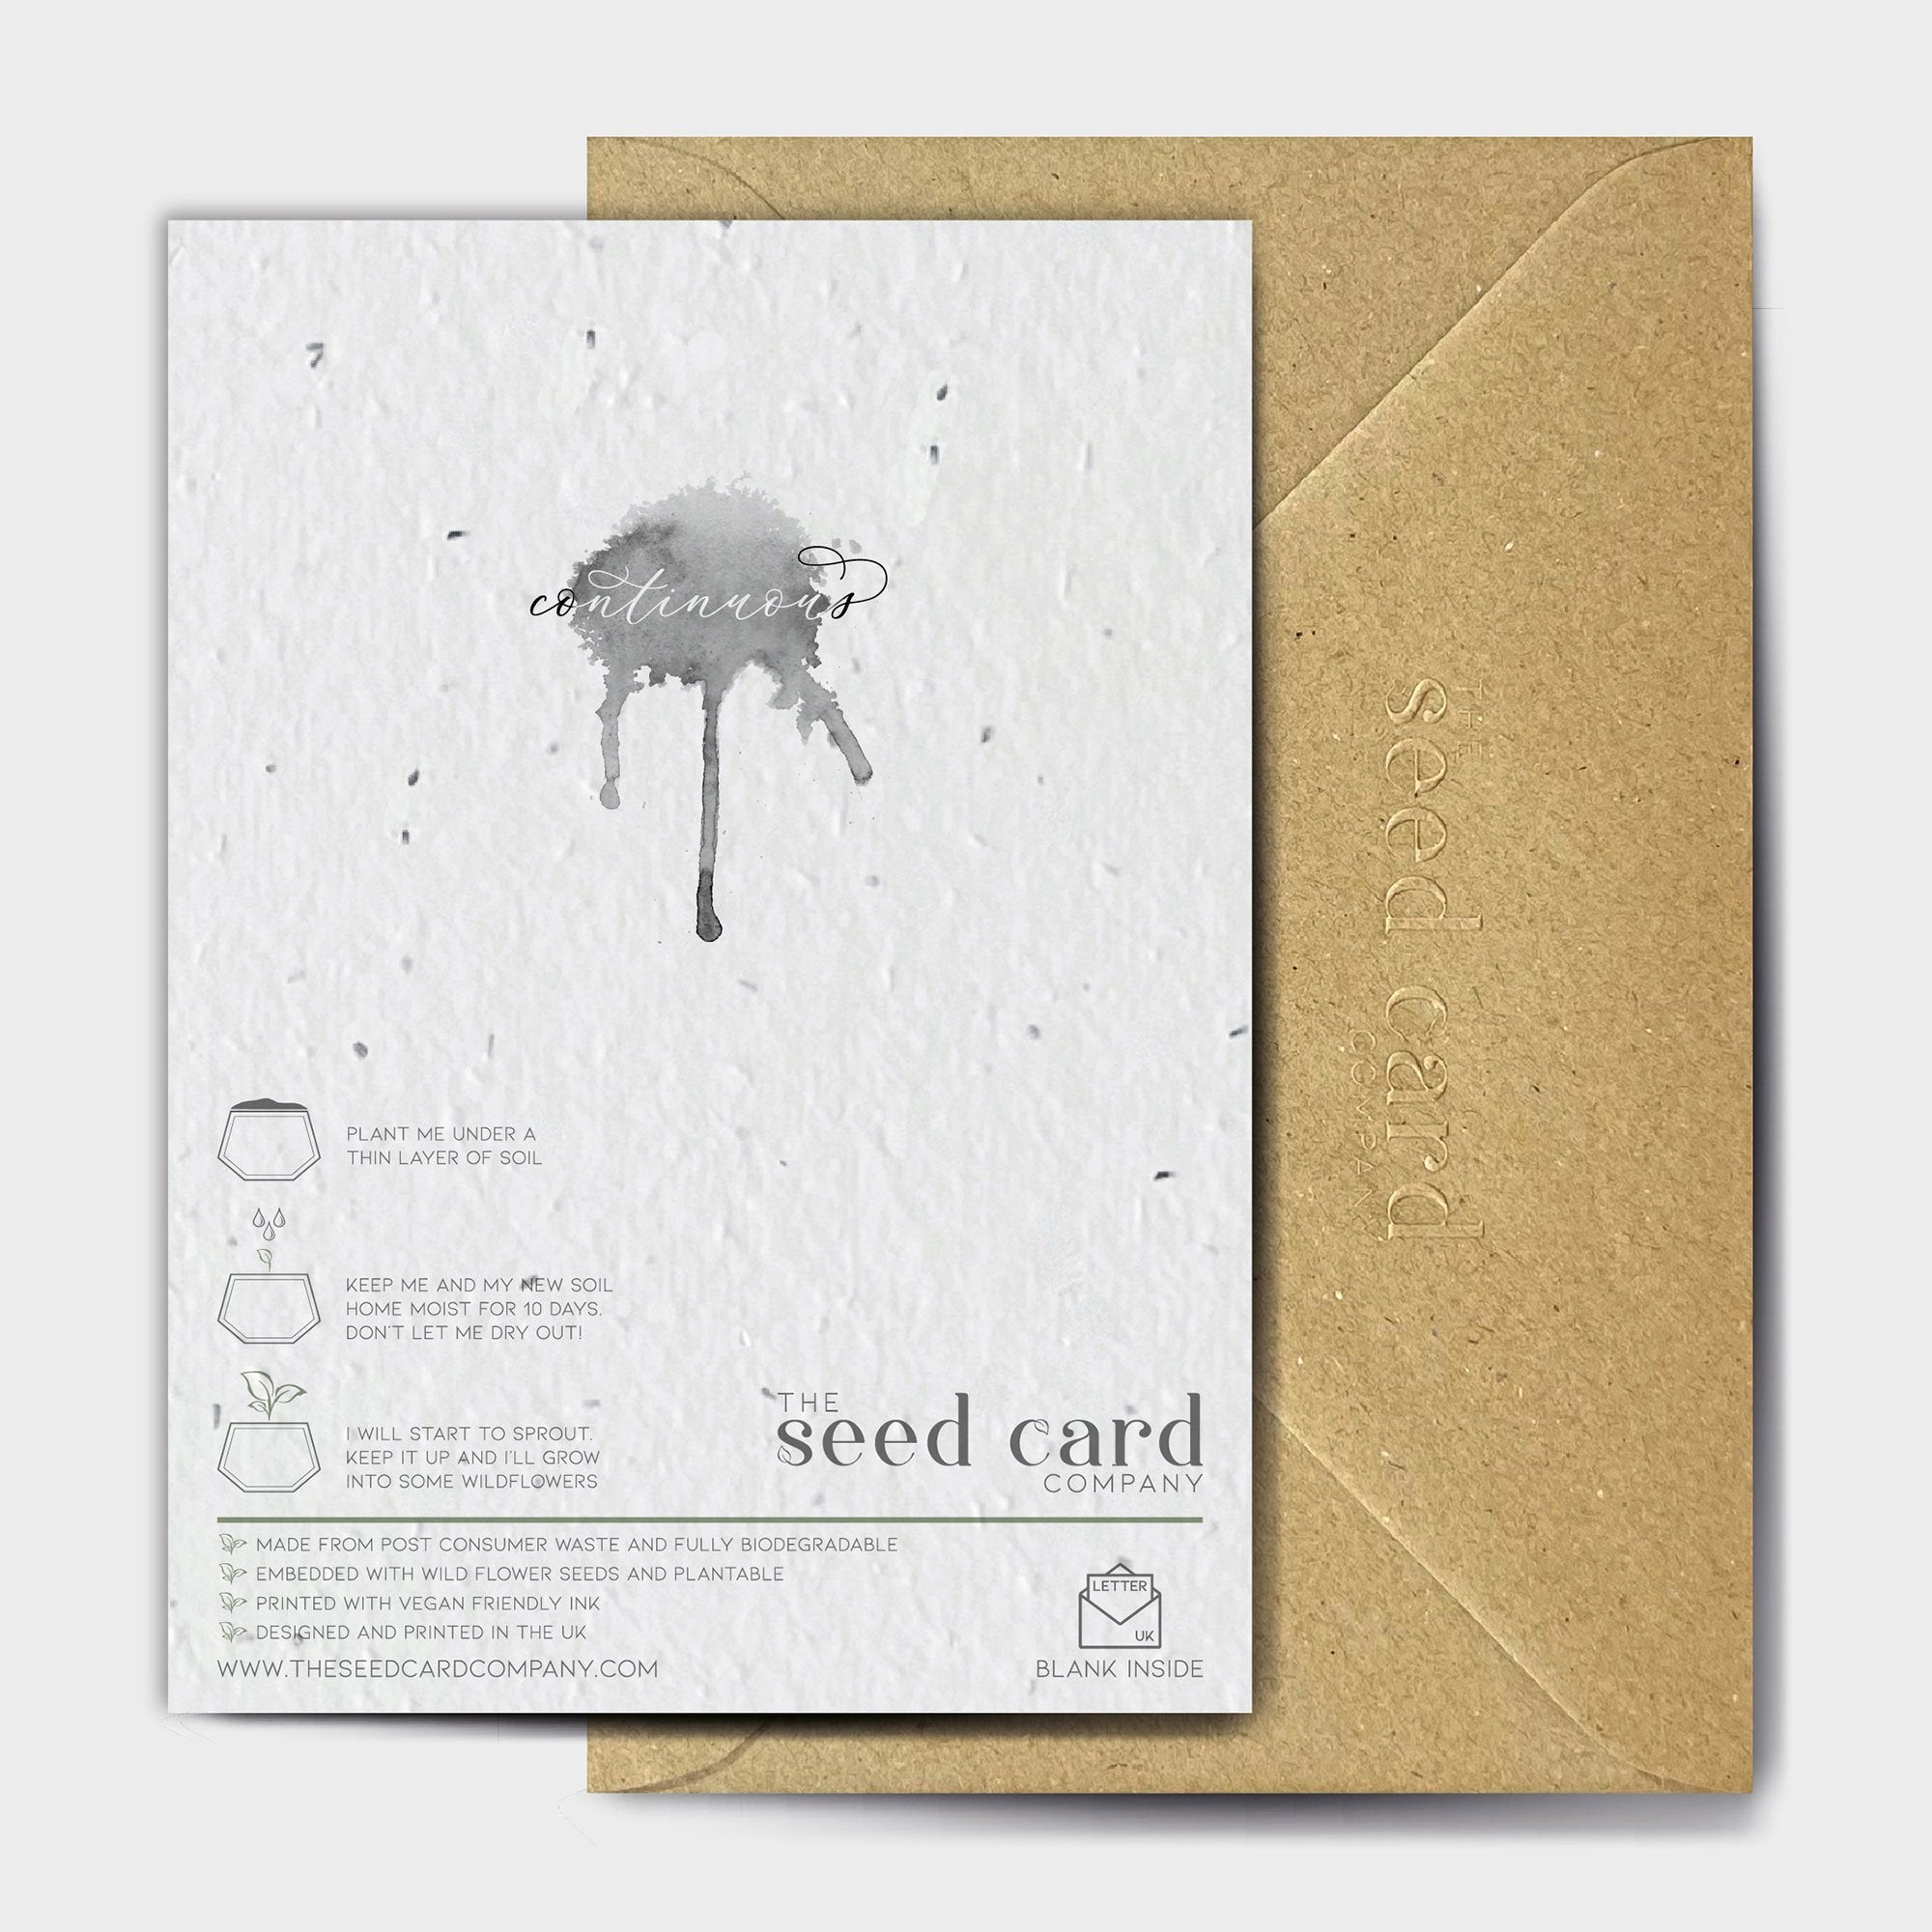 Shop online Keys, Keys, Keys - 100% biodegradable seed-embedded cards Shop -The Seed Card Company